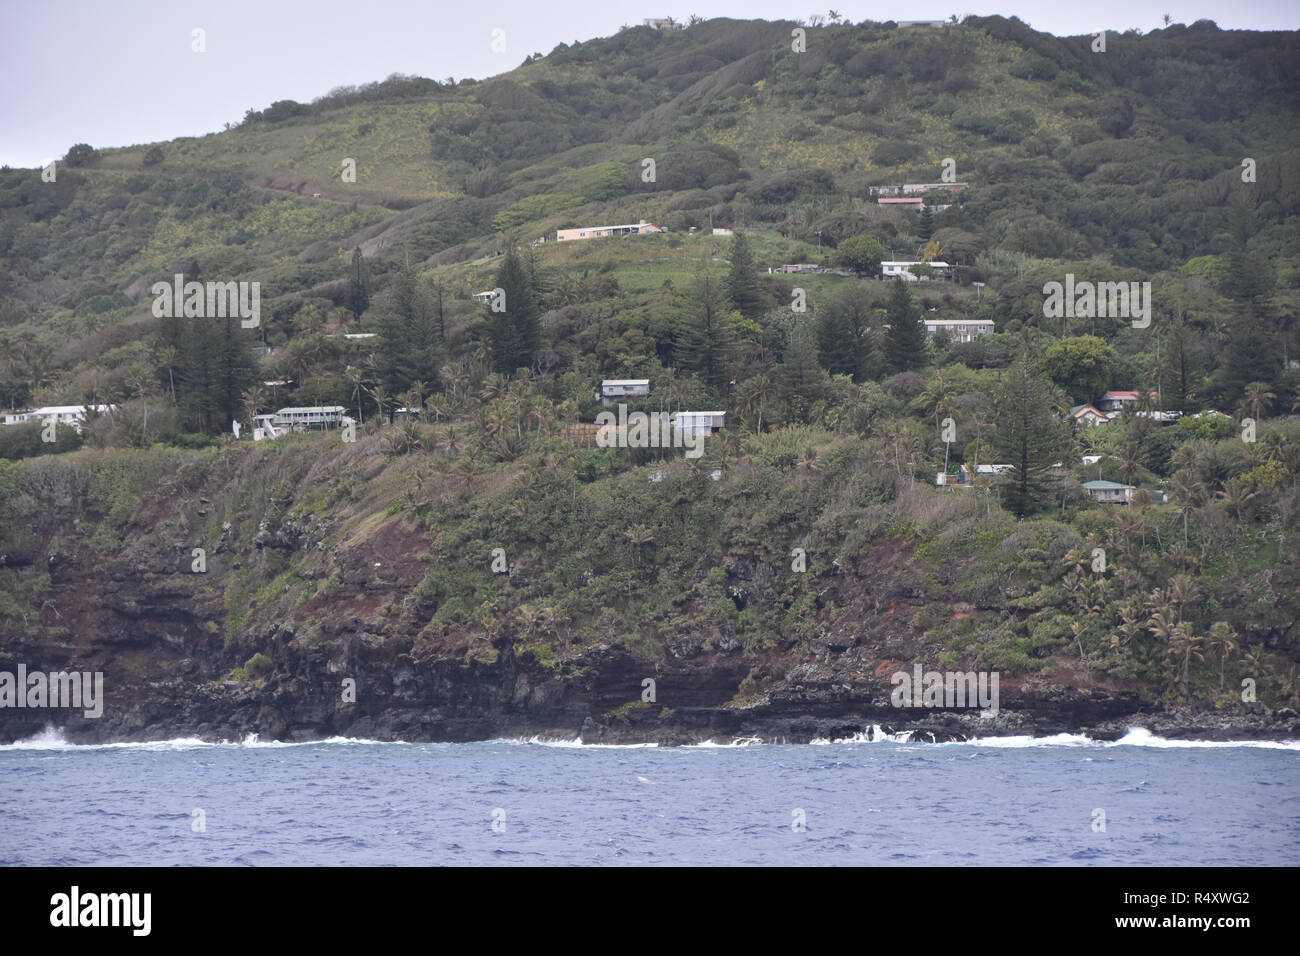 Part of the Adamstown settlement on Pitcairn Island Stock Photo